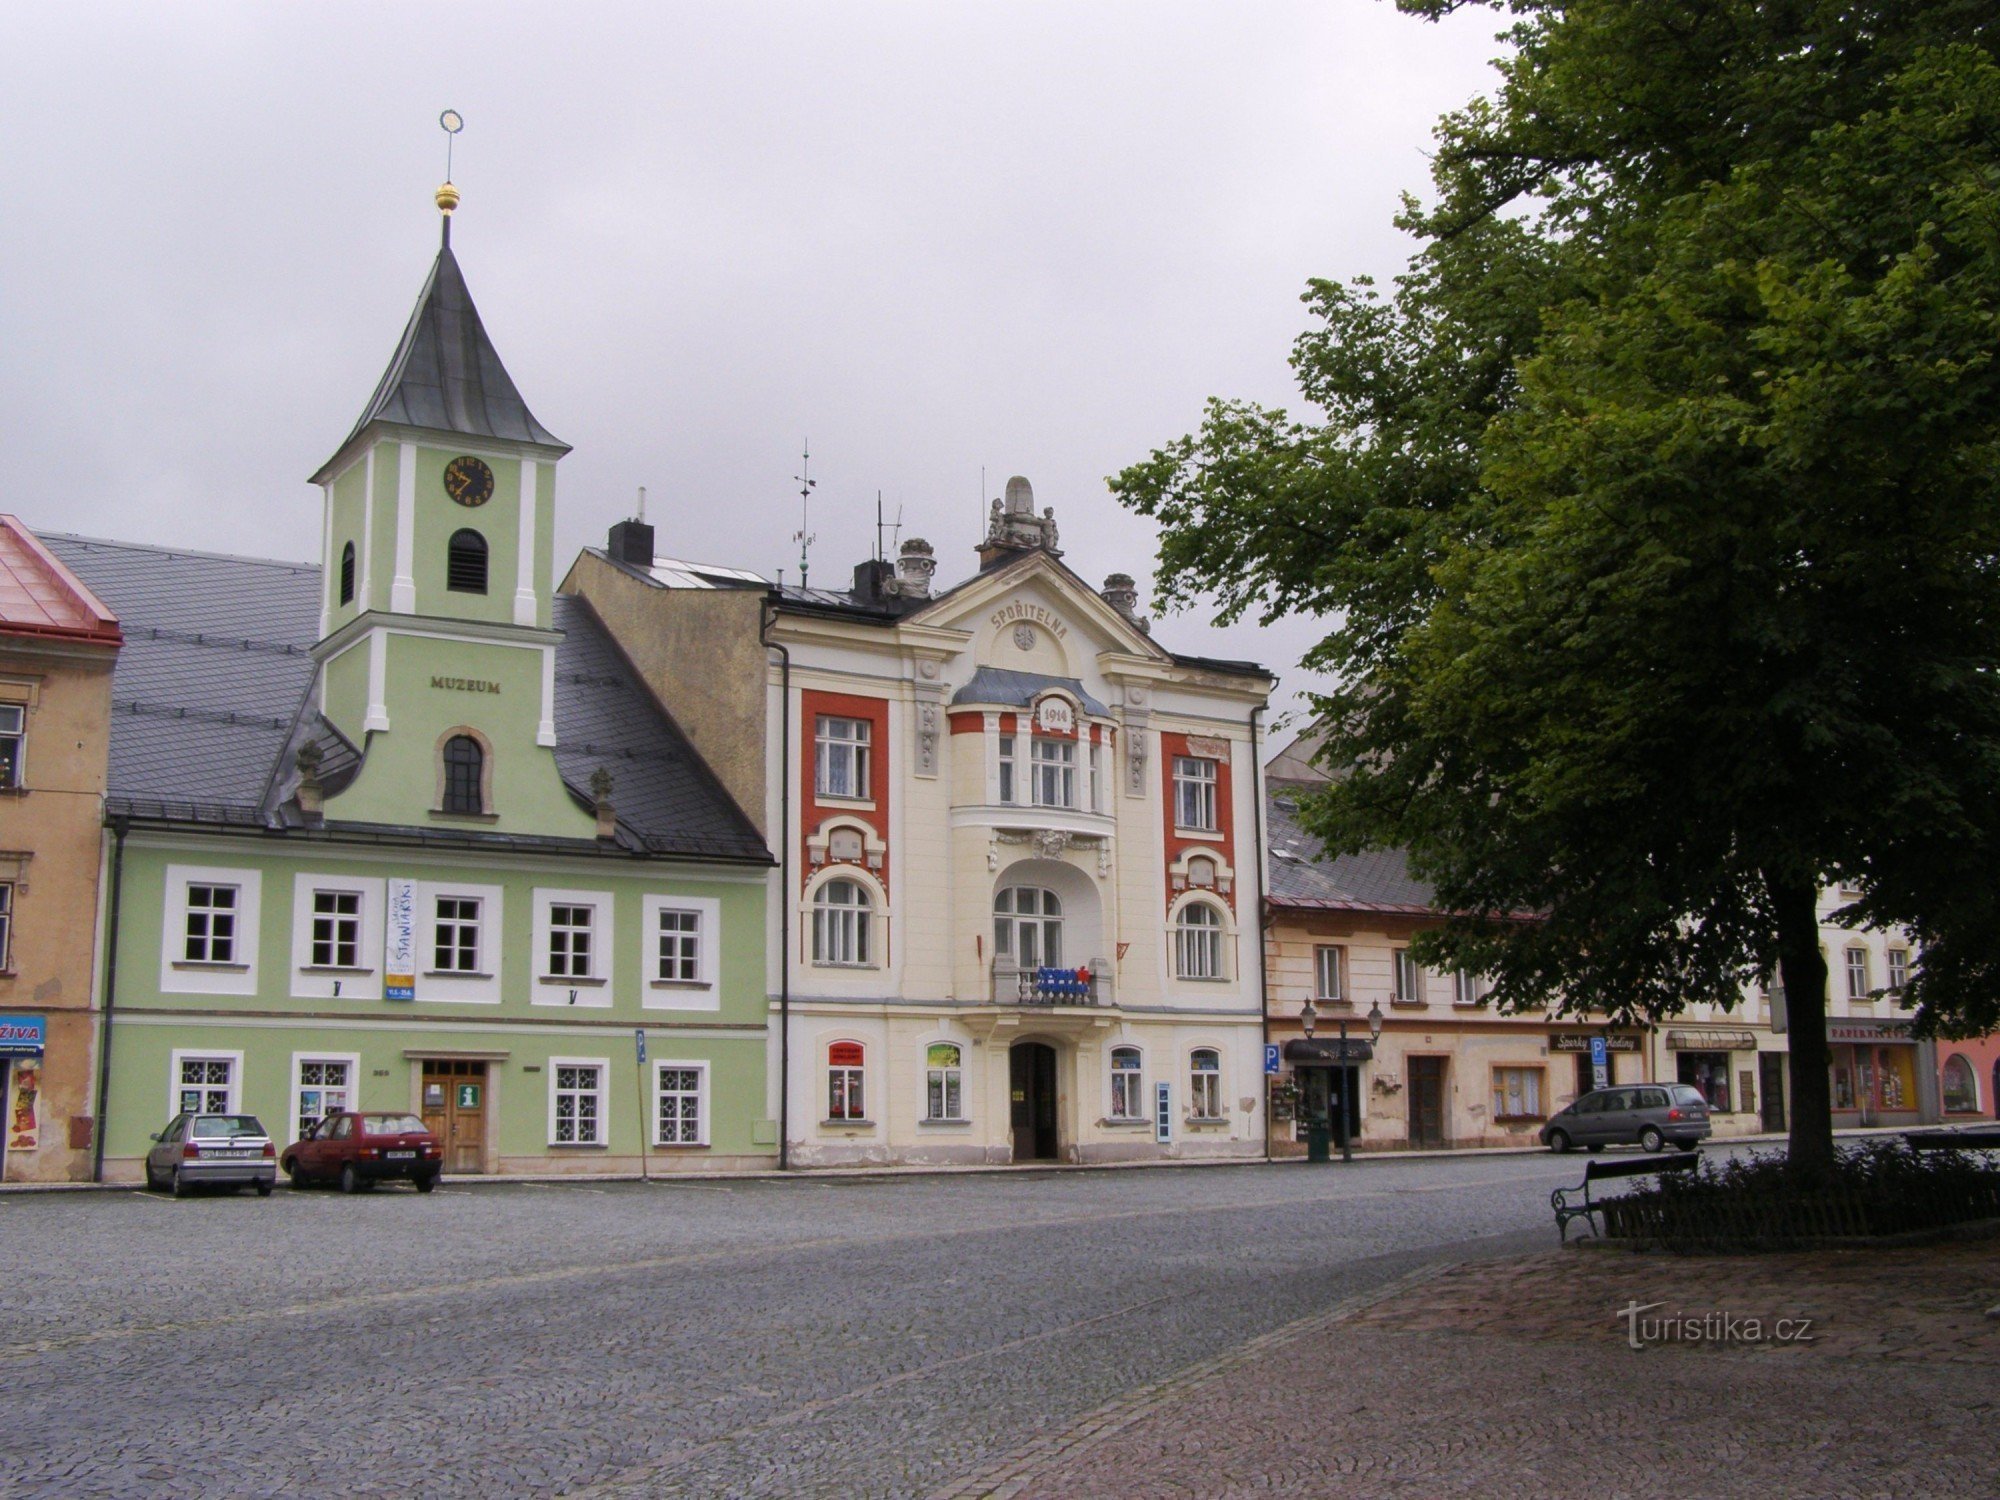 Králíky - Μουσείο, Κέντρο Τουριστικών Πληροφοριών